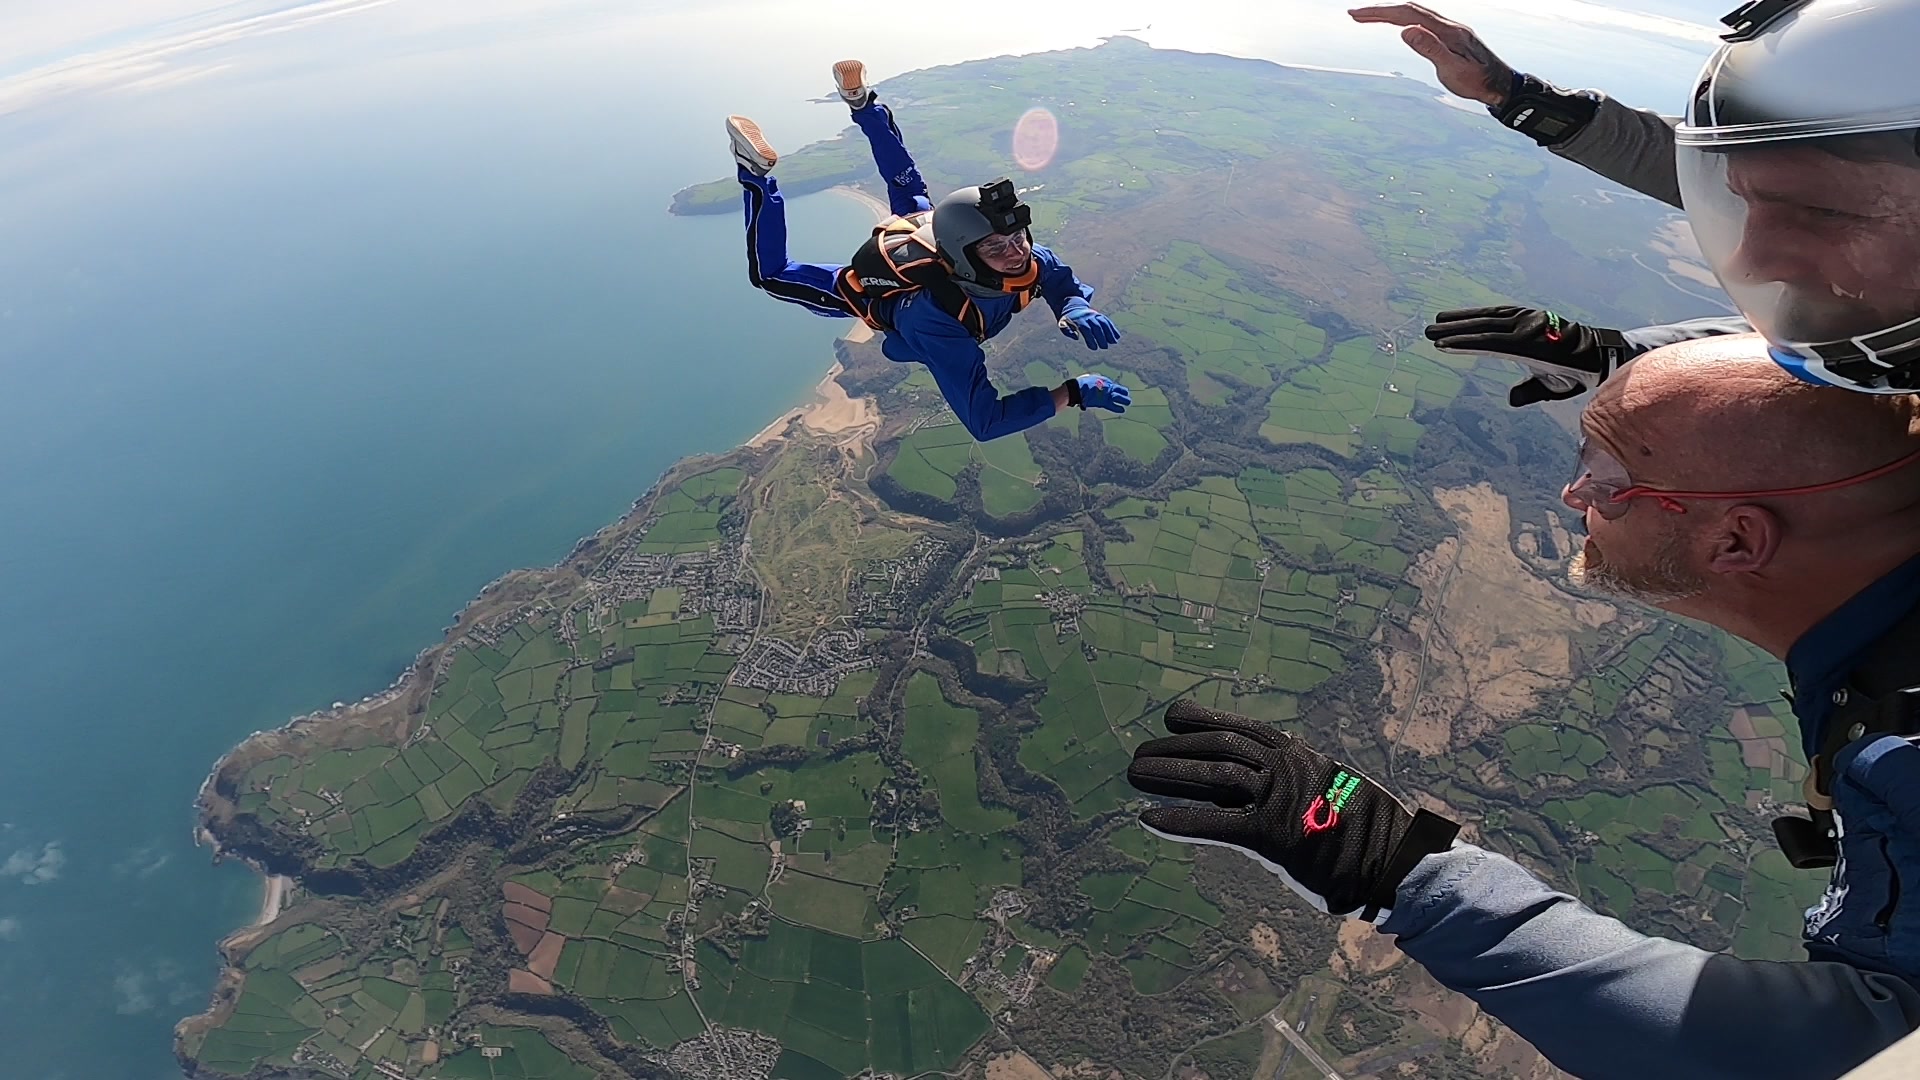 Camera man in freefall at Skydive Swansea